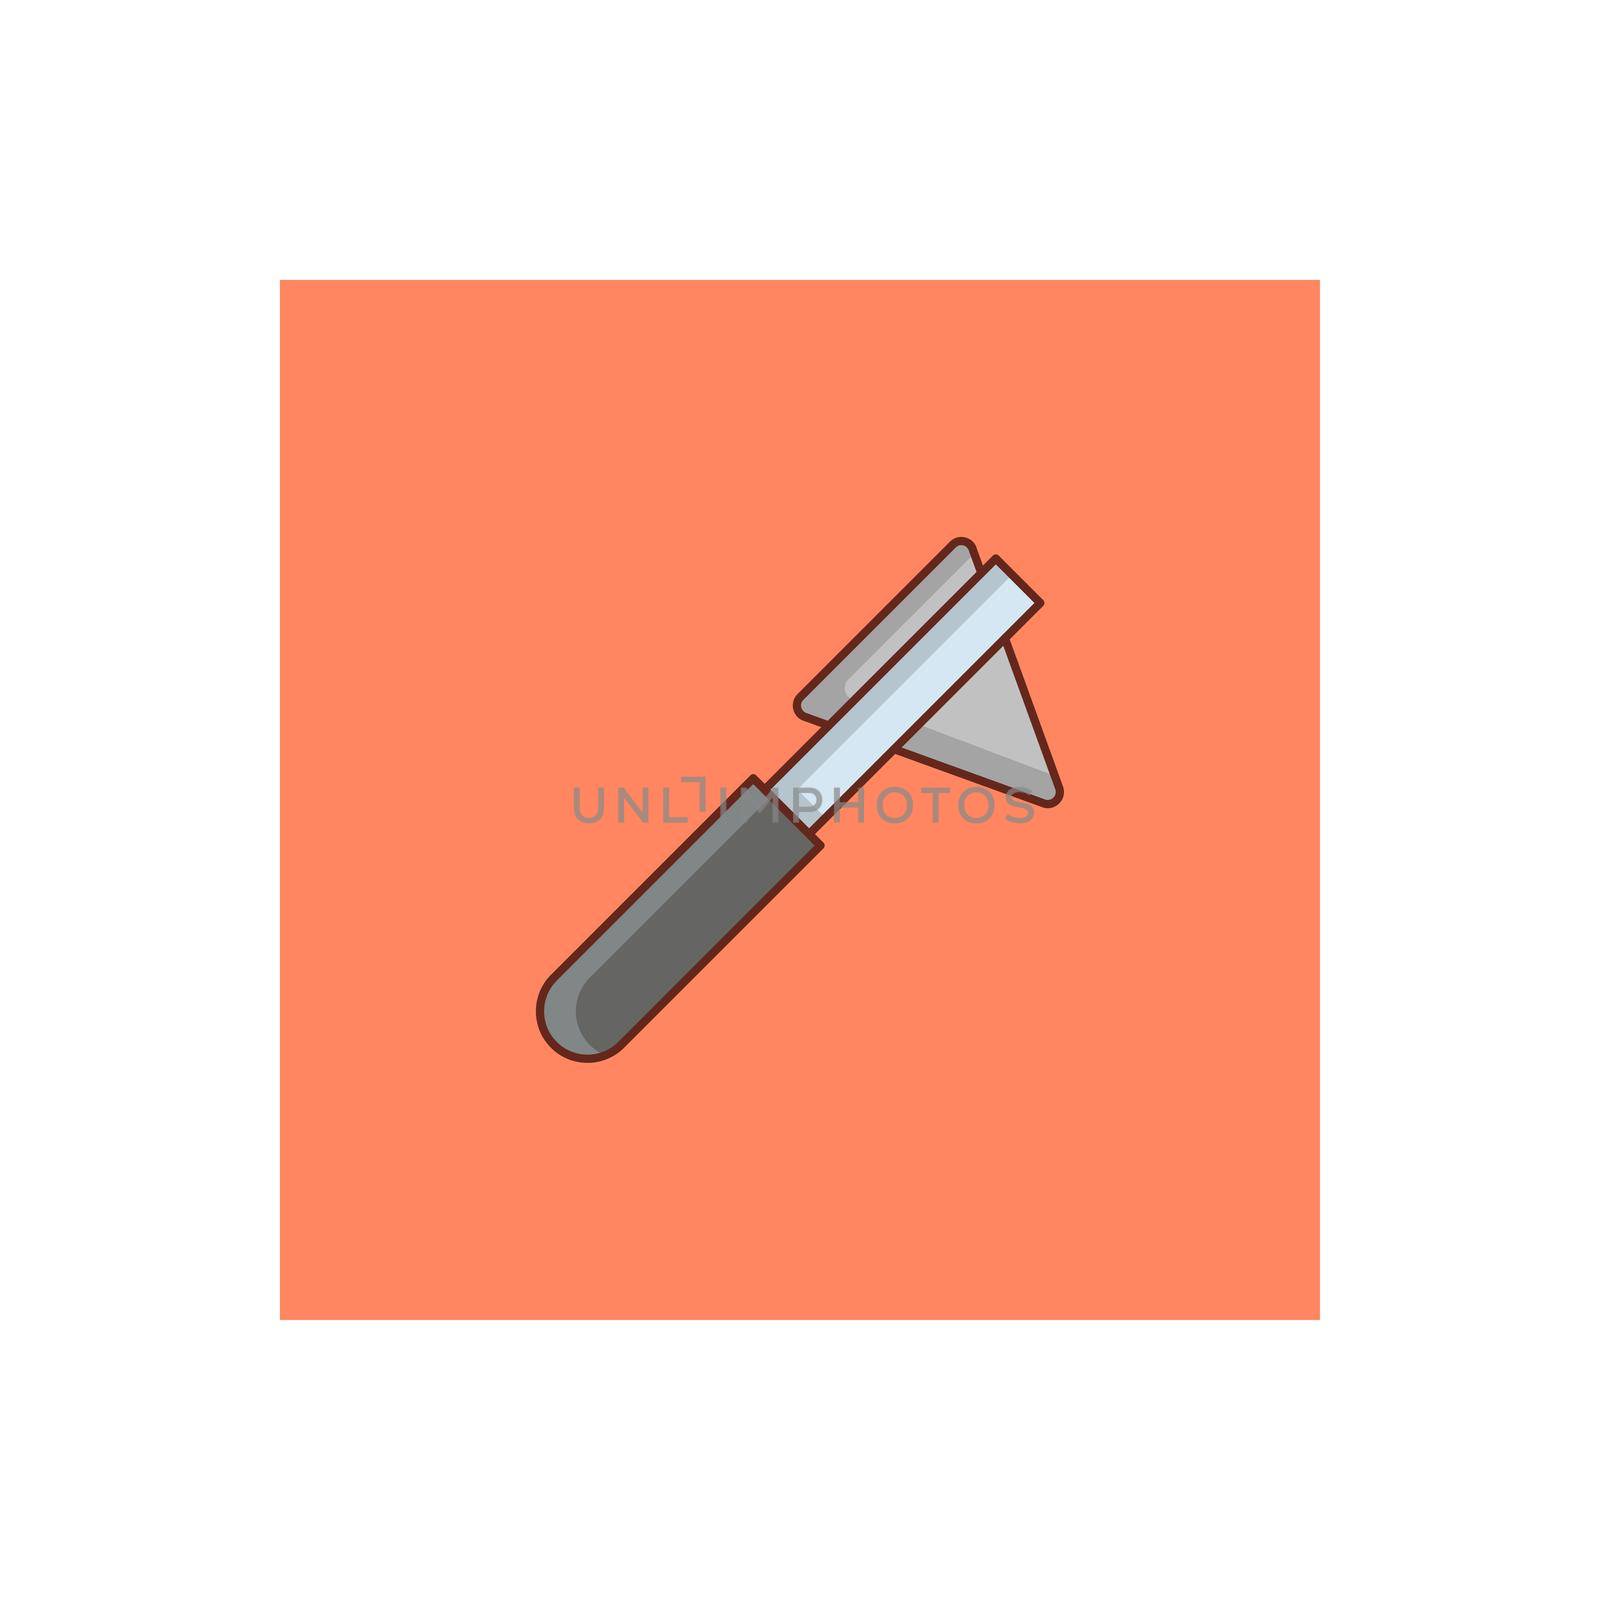 dentist vector flat color icon